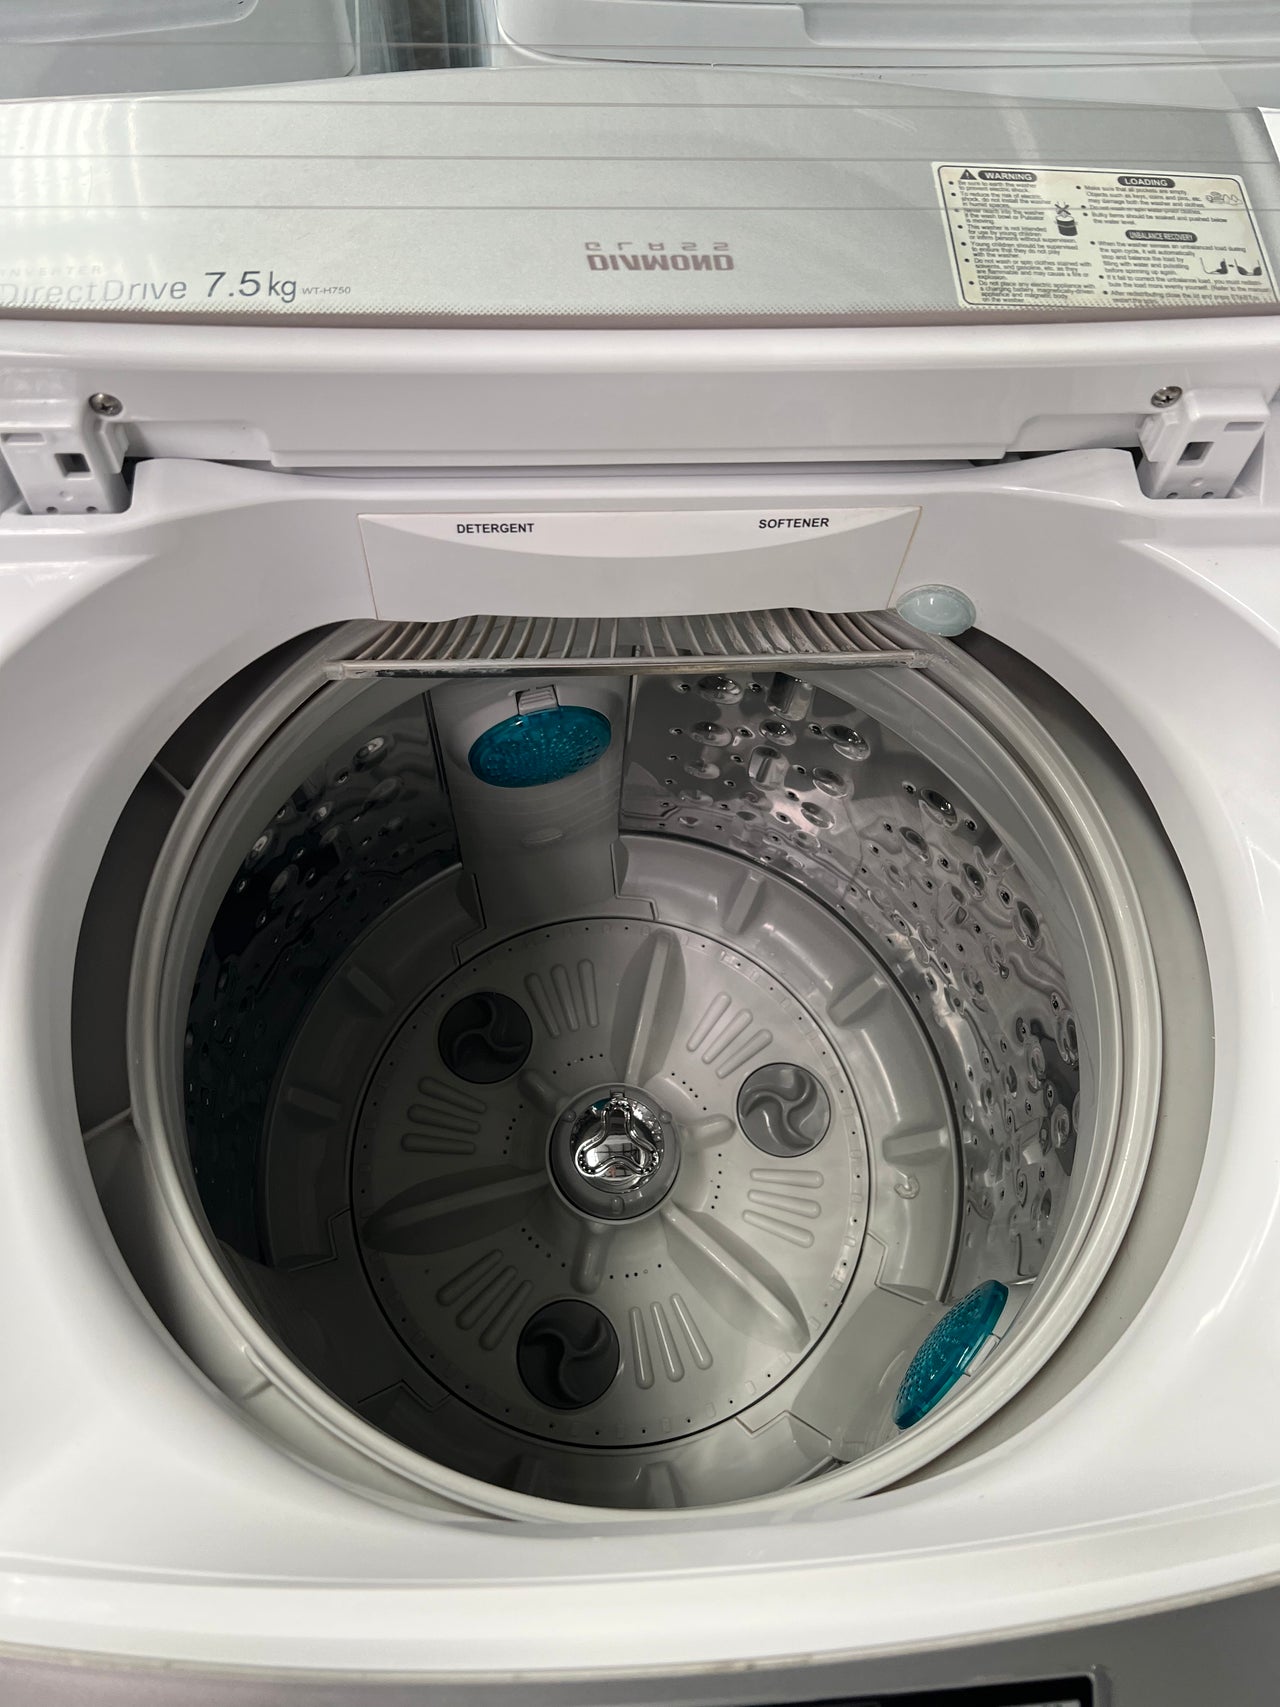 Second hand LG WTH750 7.5kg Top Load Washing Machine - Second Hand Appliances Geebung